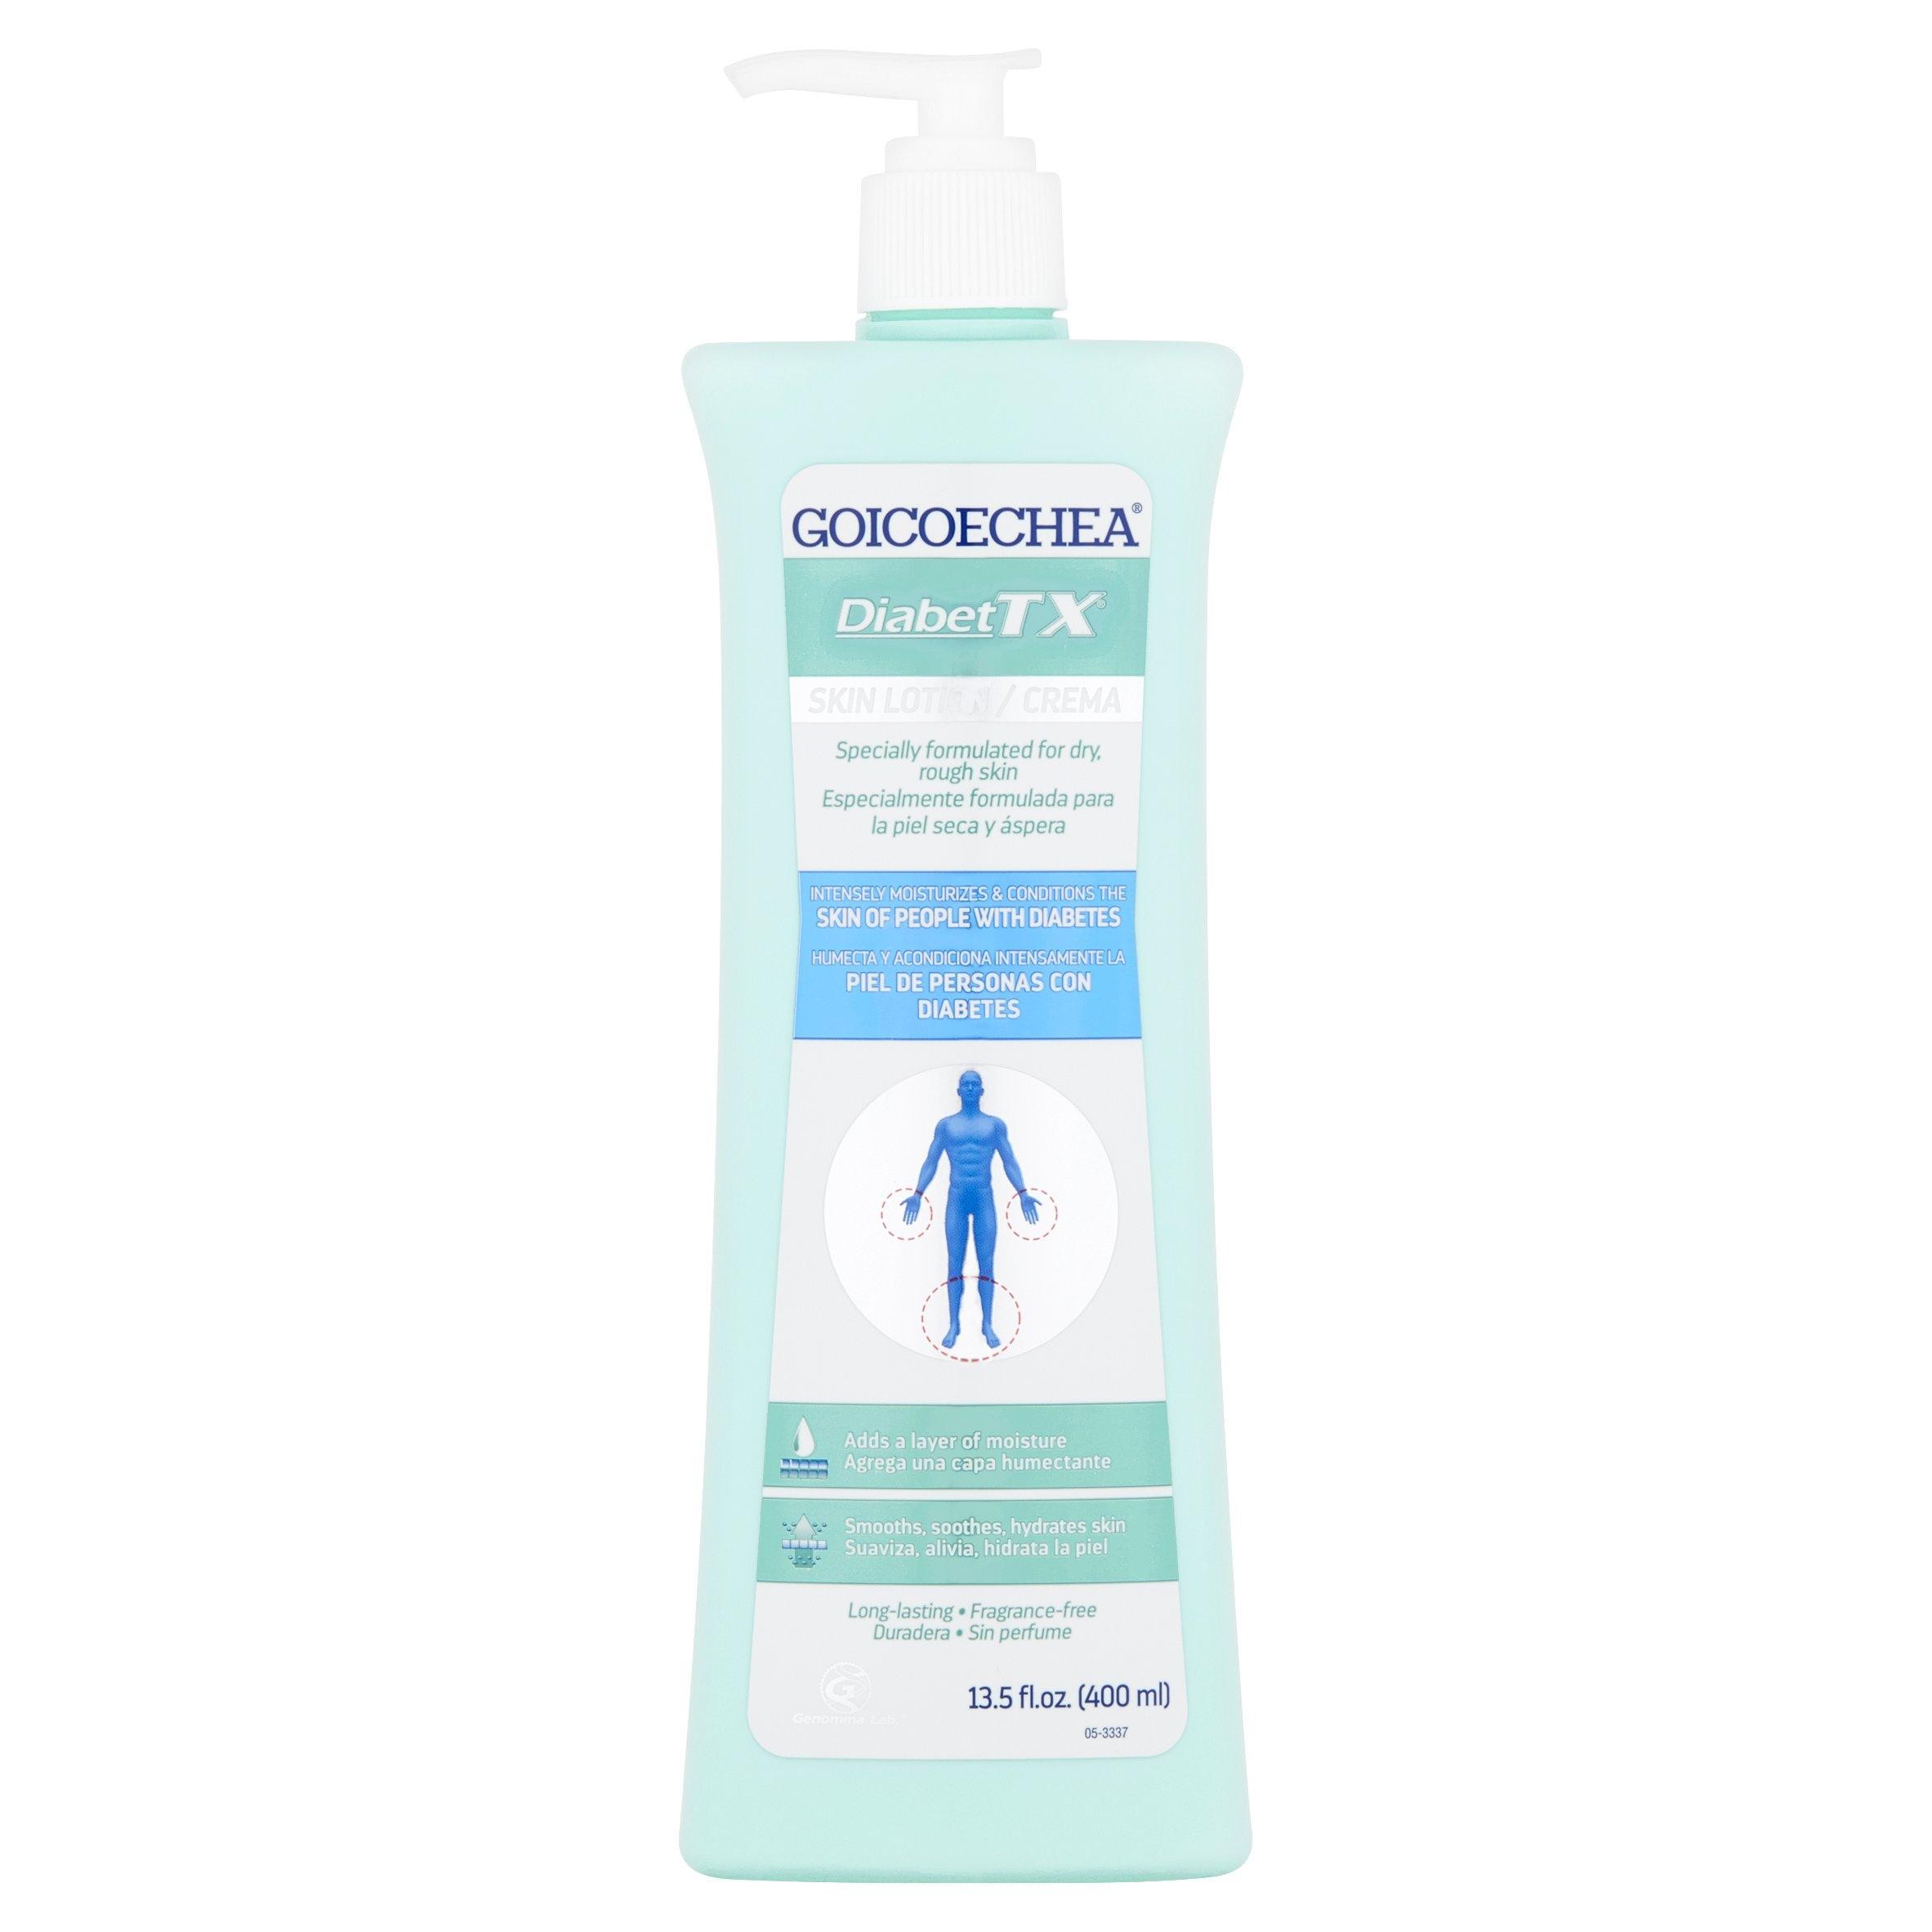 Goicoechea DiabetTX Dry Skin Moisturizer Lotion Fragrance-Free - 13.5 Oz